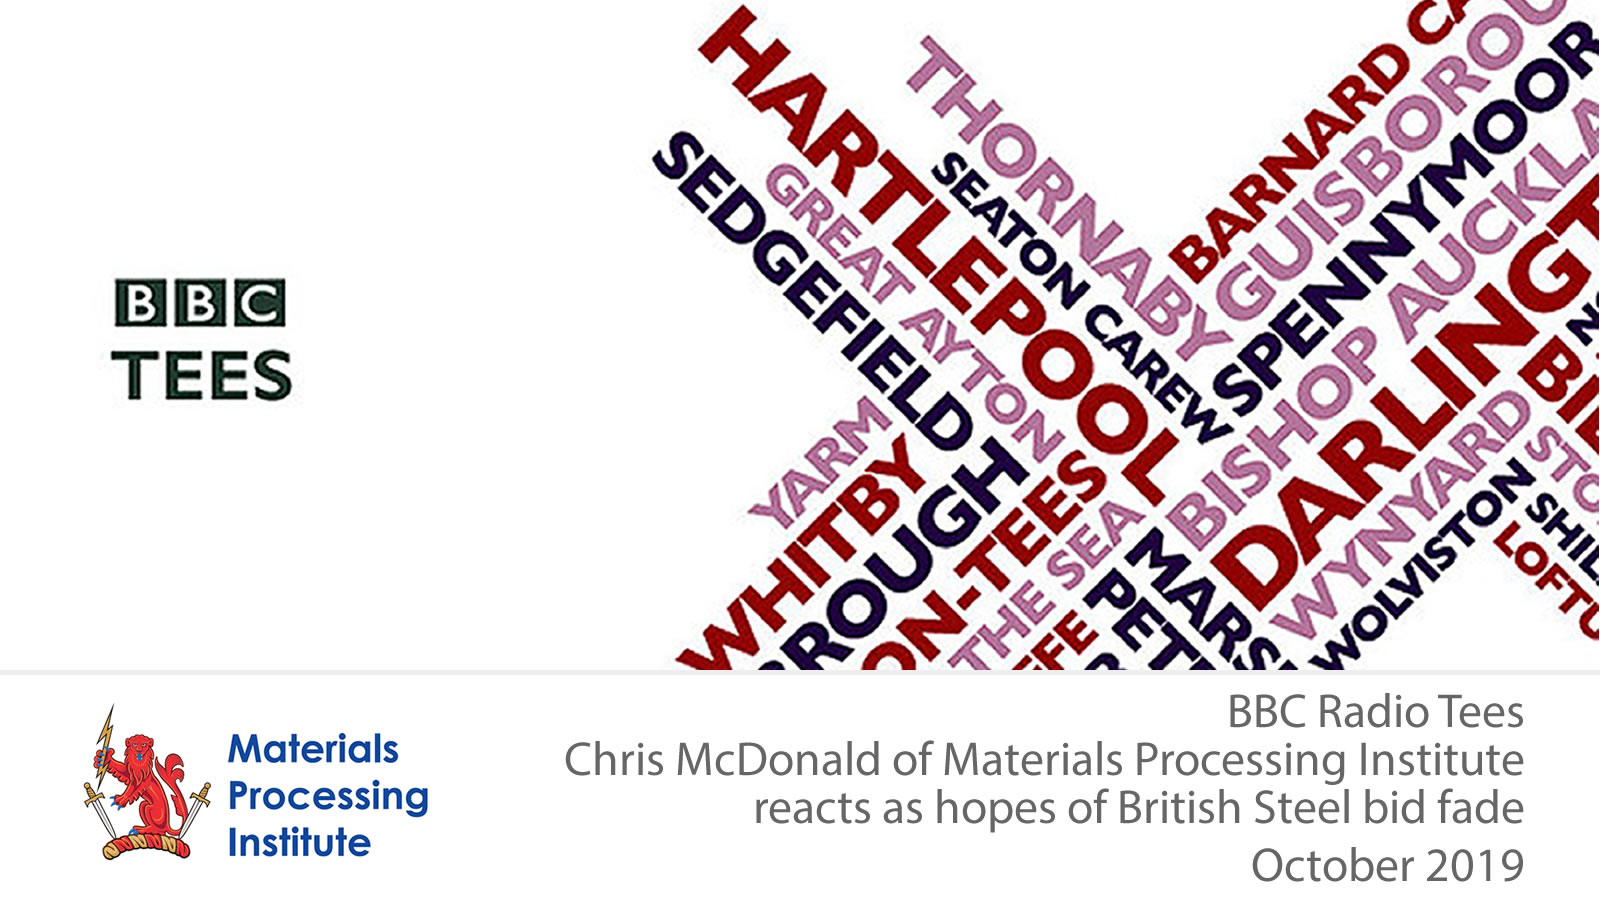 Chris McDonald of Materials Processing Institute reacts as hopes of British Steel bid fade - October 2019